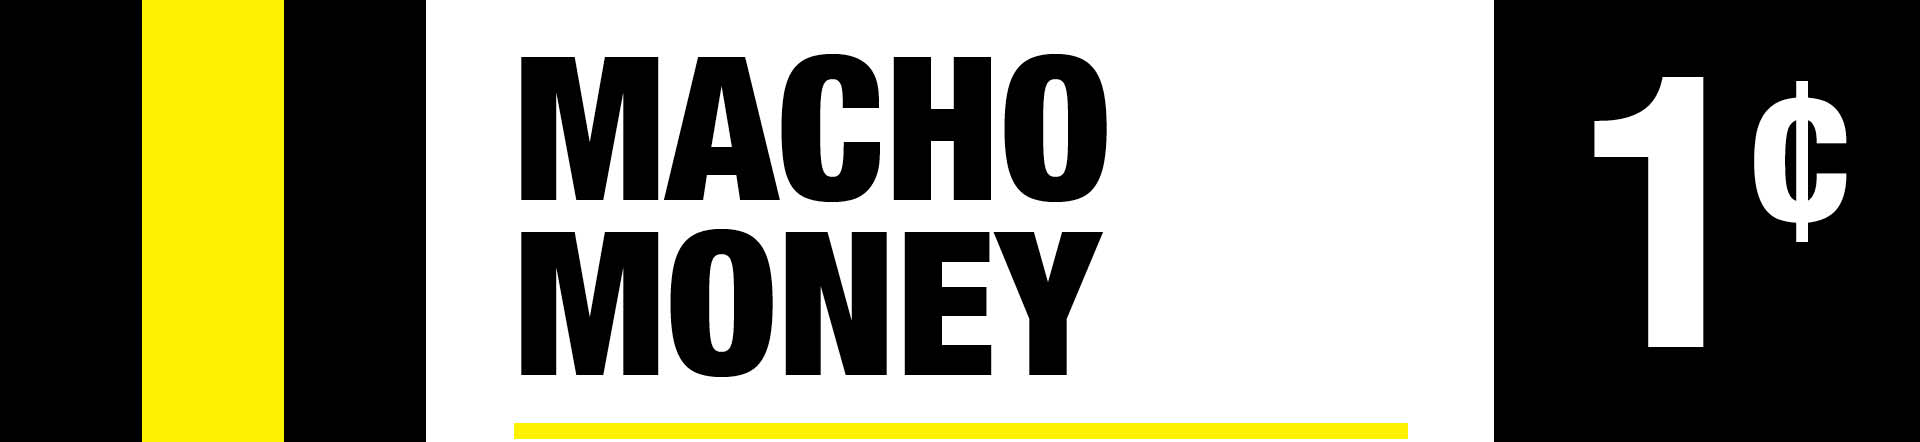 Macho Money